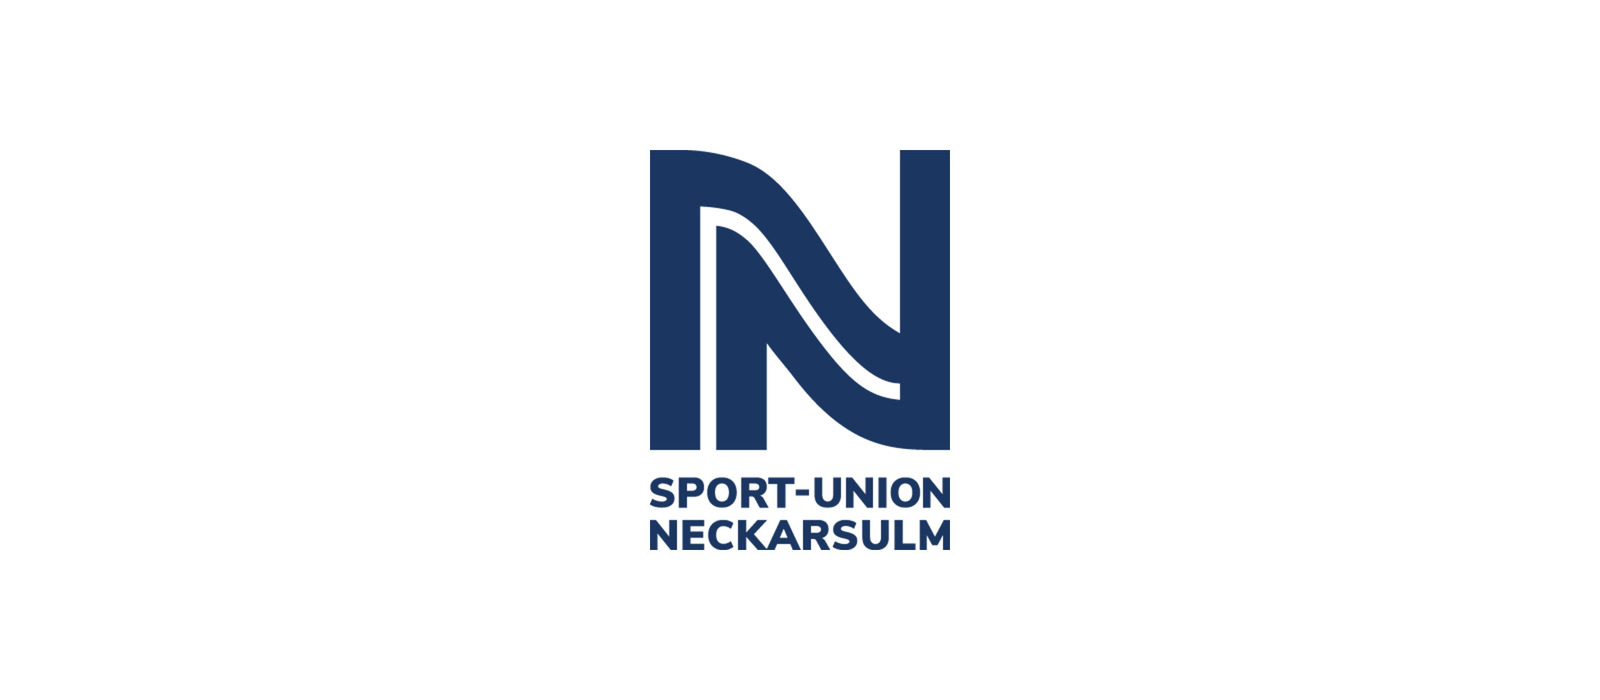 Sport-Union Neckarsulm vs TuS Metzingen